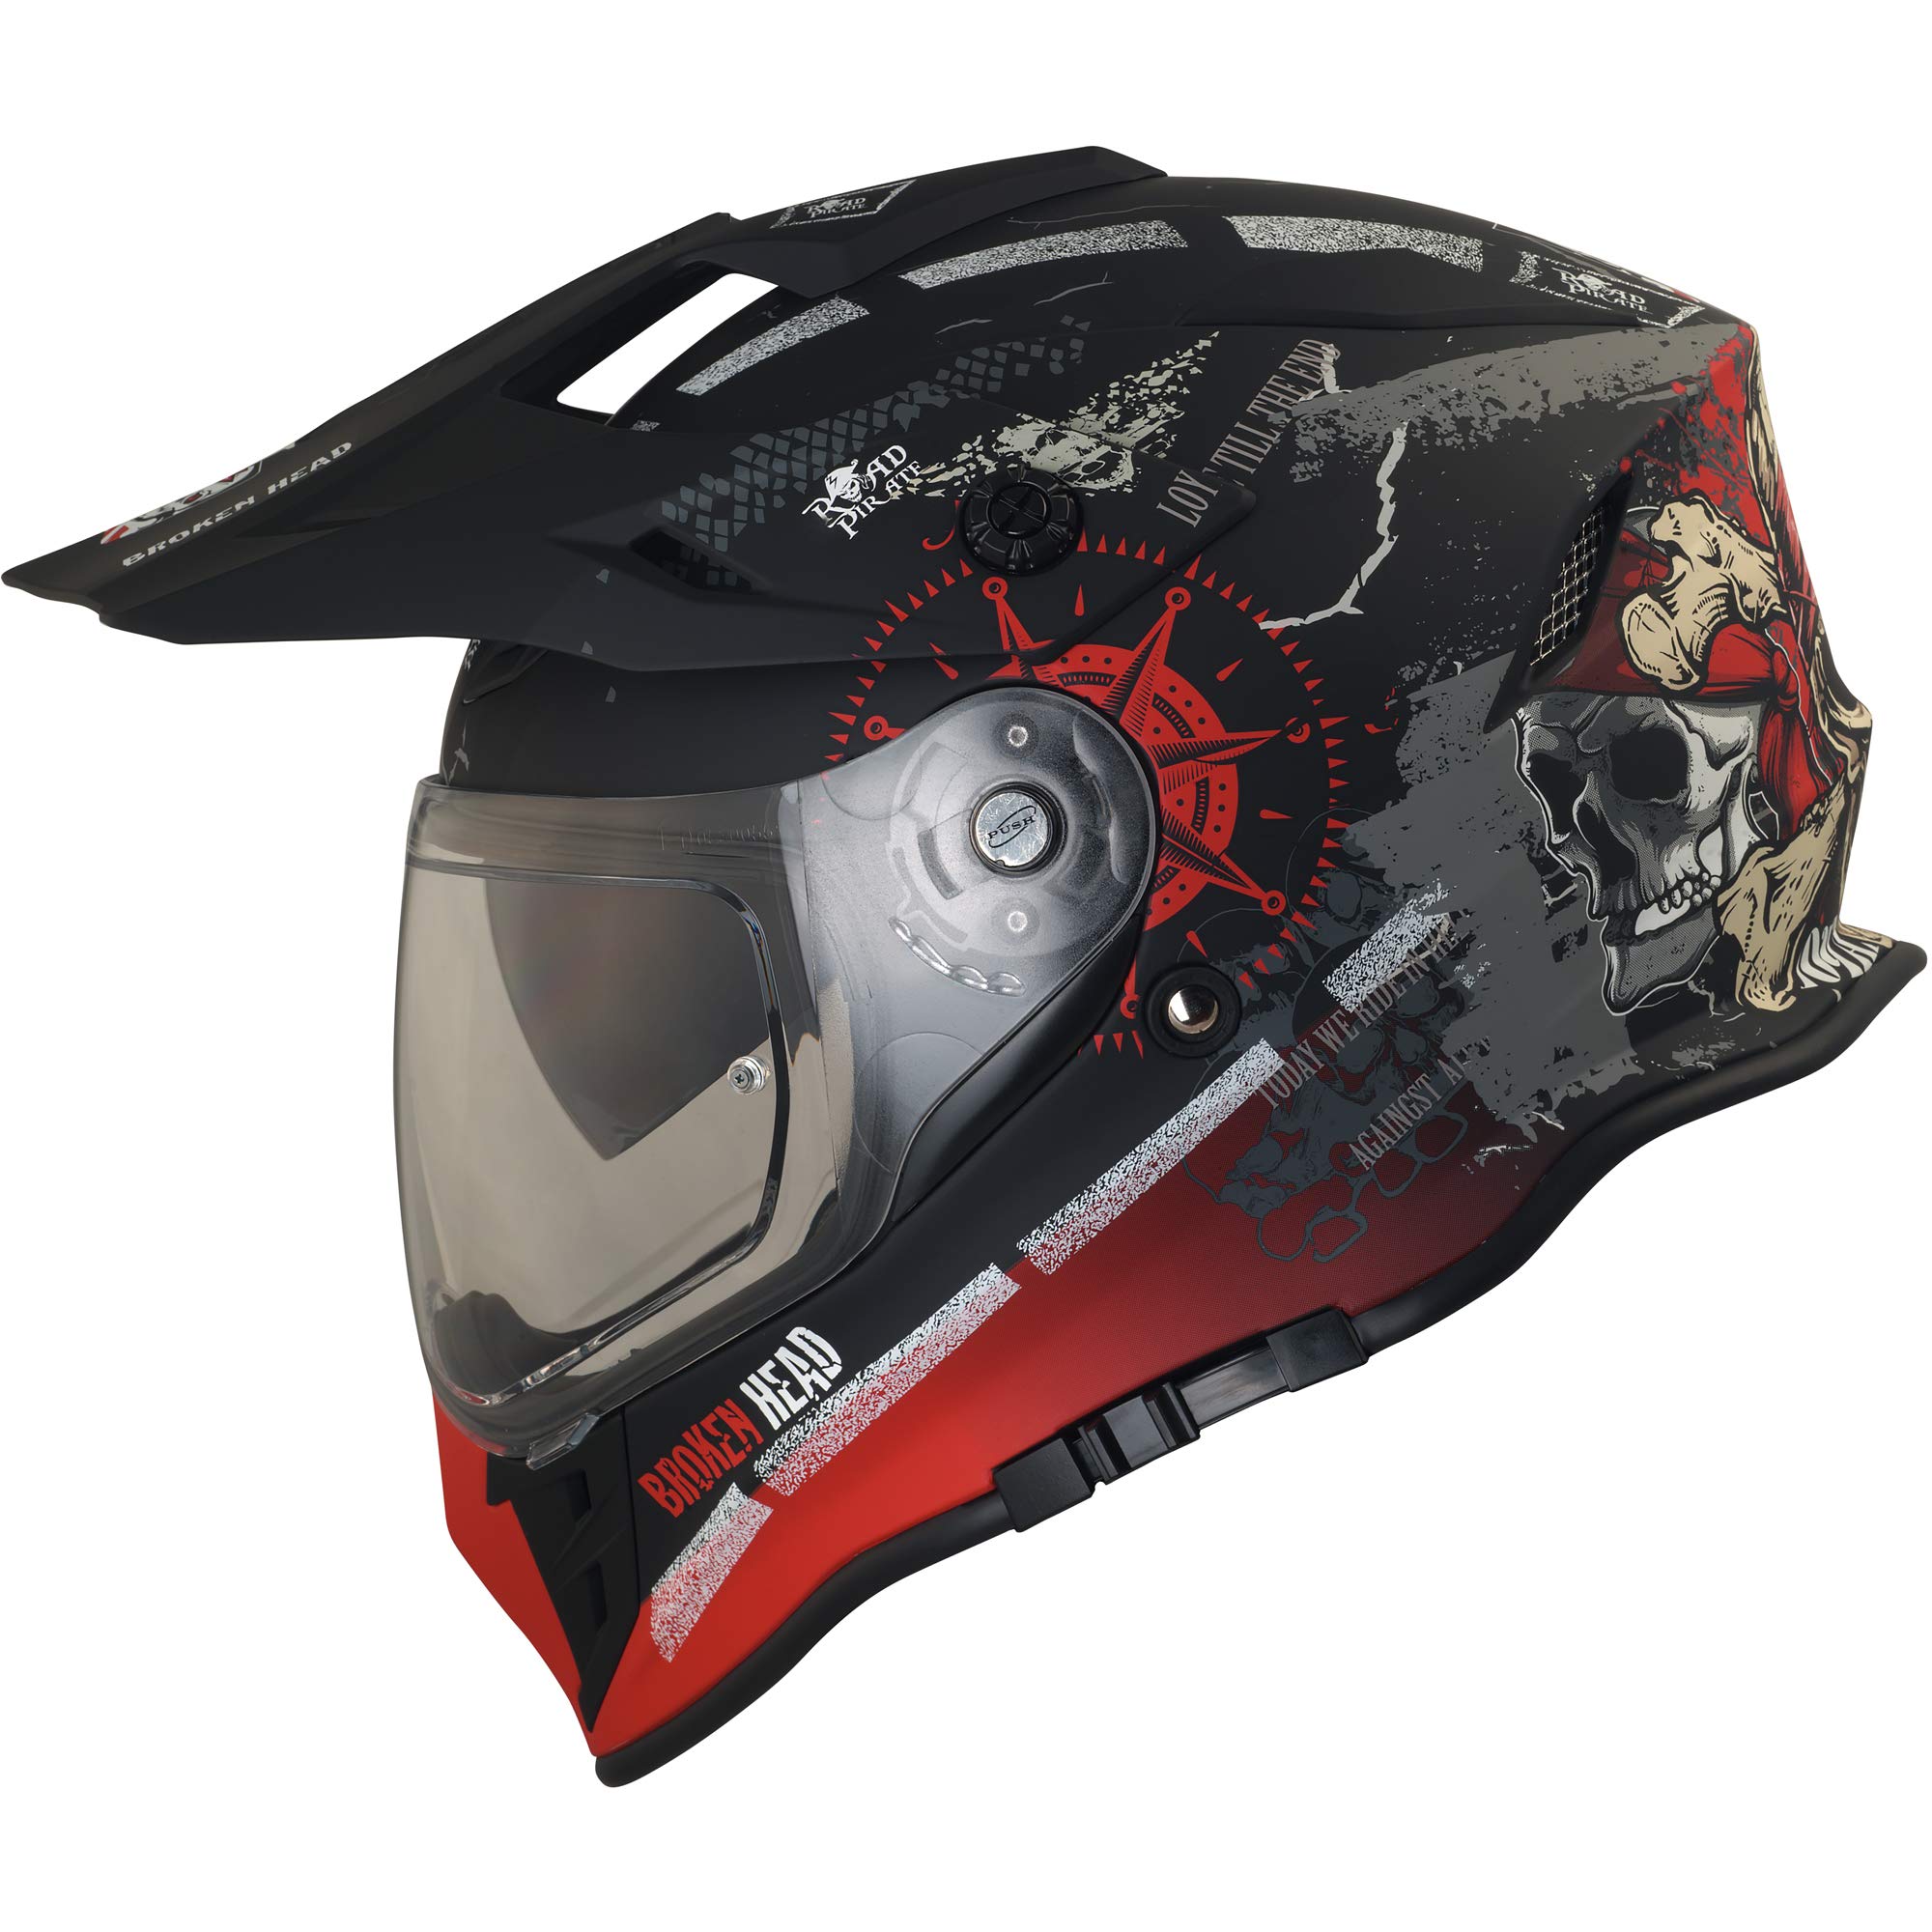 Broken Head Road Pirate VX2 Motocross-Helm - Motorradhelm Mit Sonnenblende - MX Cross-Helm In Schwarz & Rot - Größe L (59-60 cm)